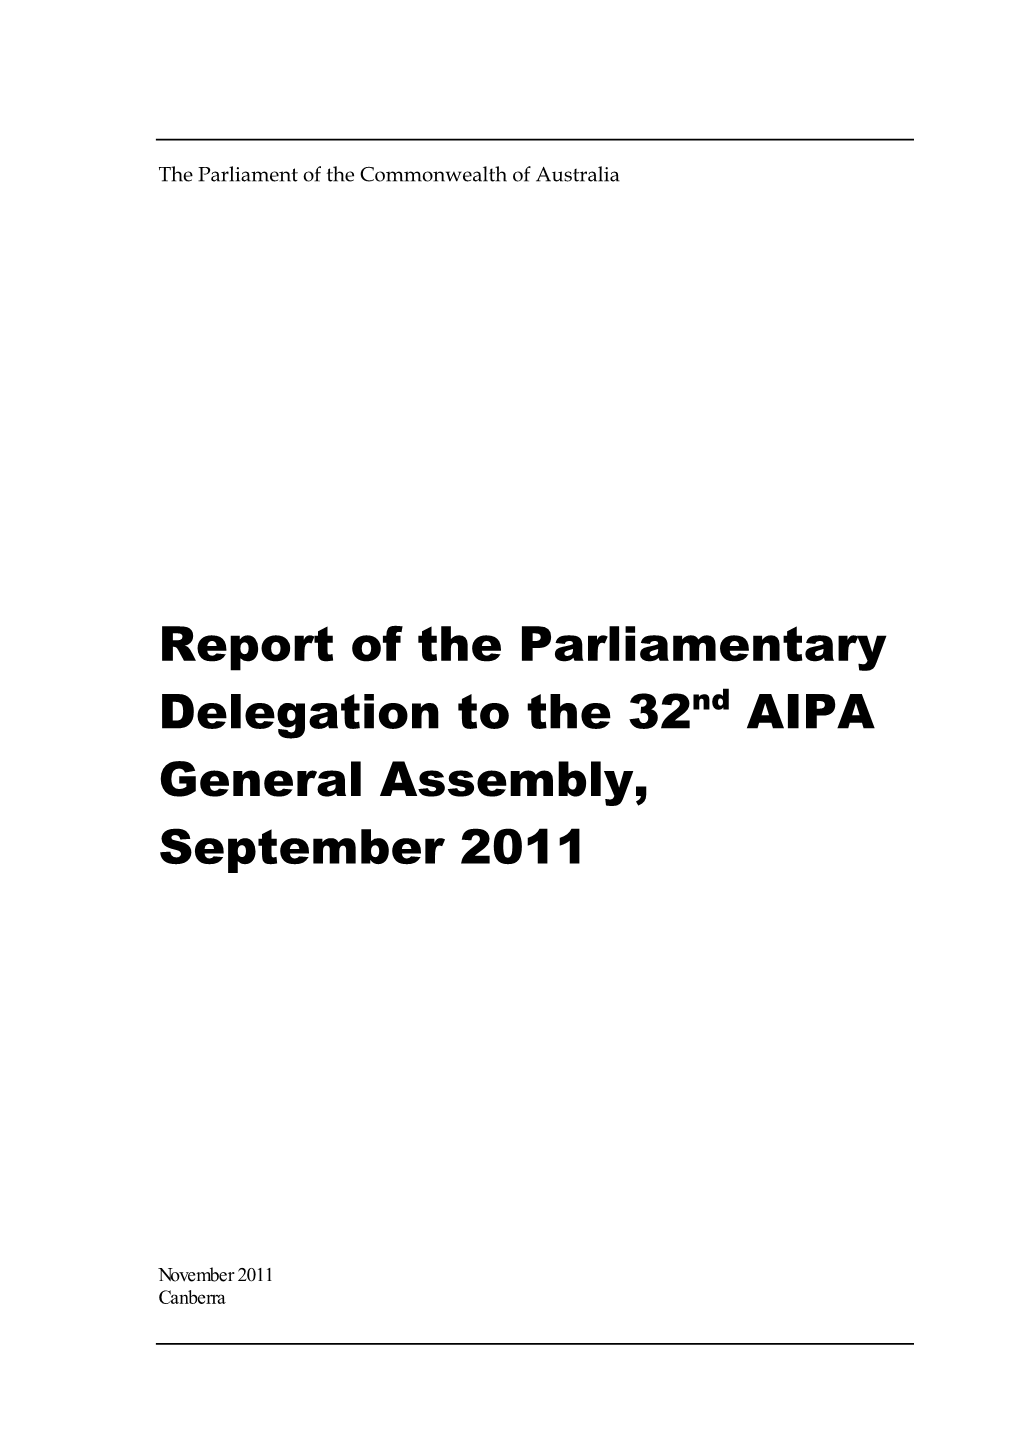 Chapter III, of the AIPA Statutes;